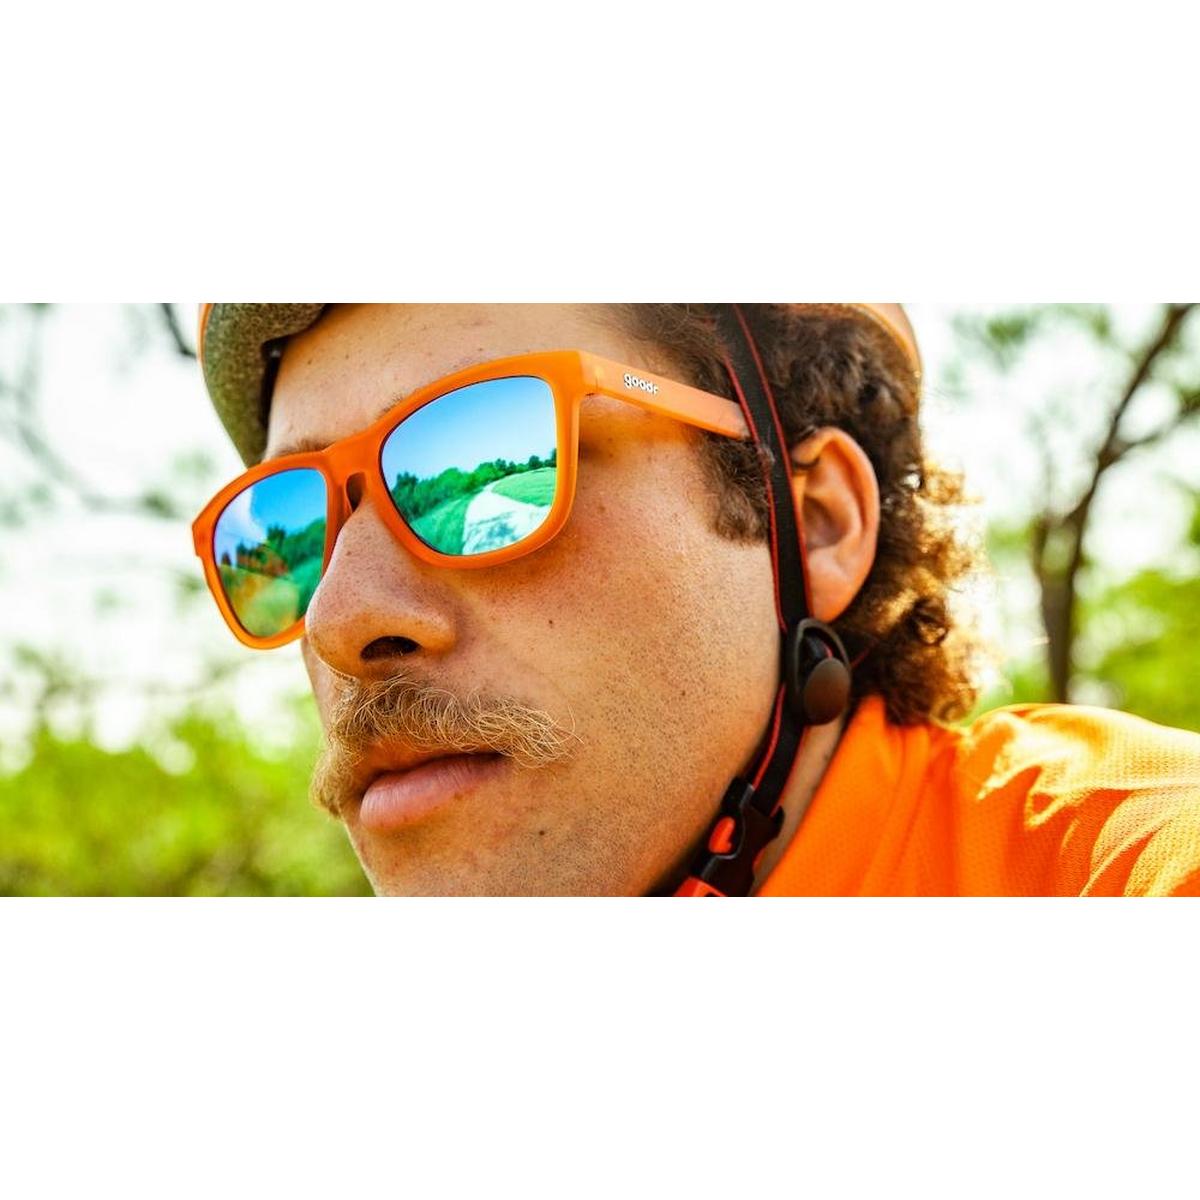 Goodr Donkey Goggles Sunglasses - Orange